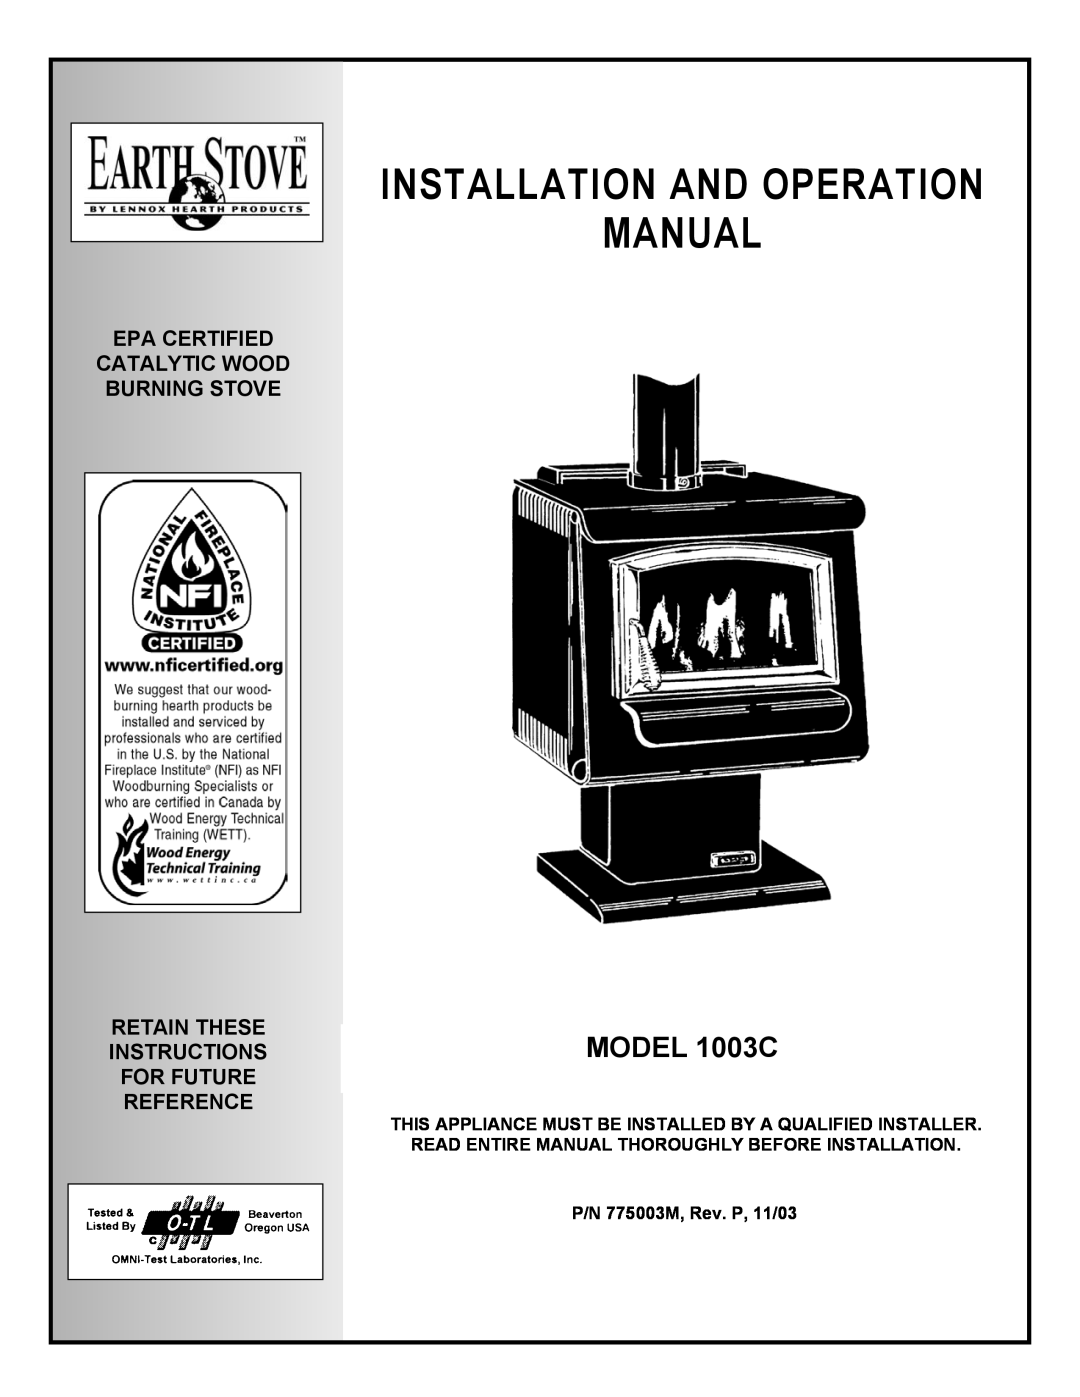 Lennox Hearth operation manual Epa Certified Catalytic Wood Burning Stove, P/N 775003M, Rev. P, 11/03, MODEL 1003C 